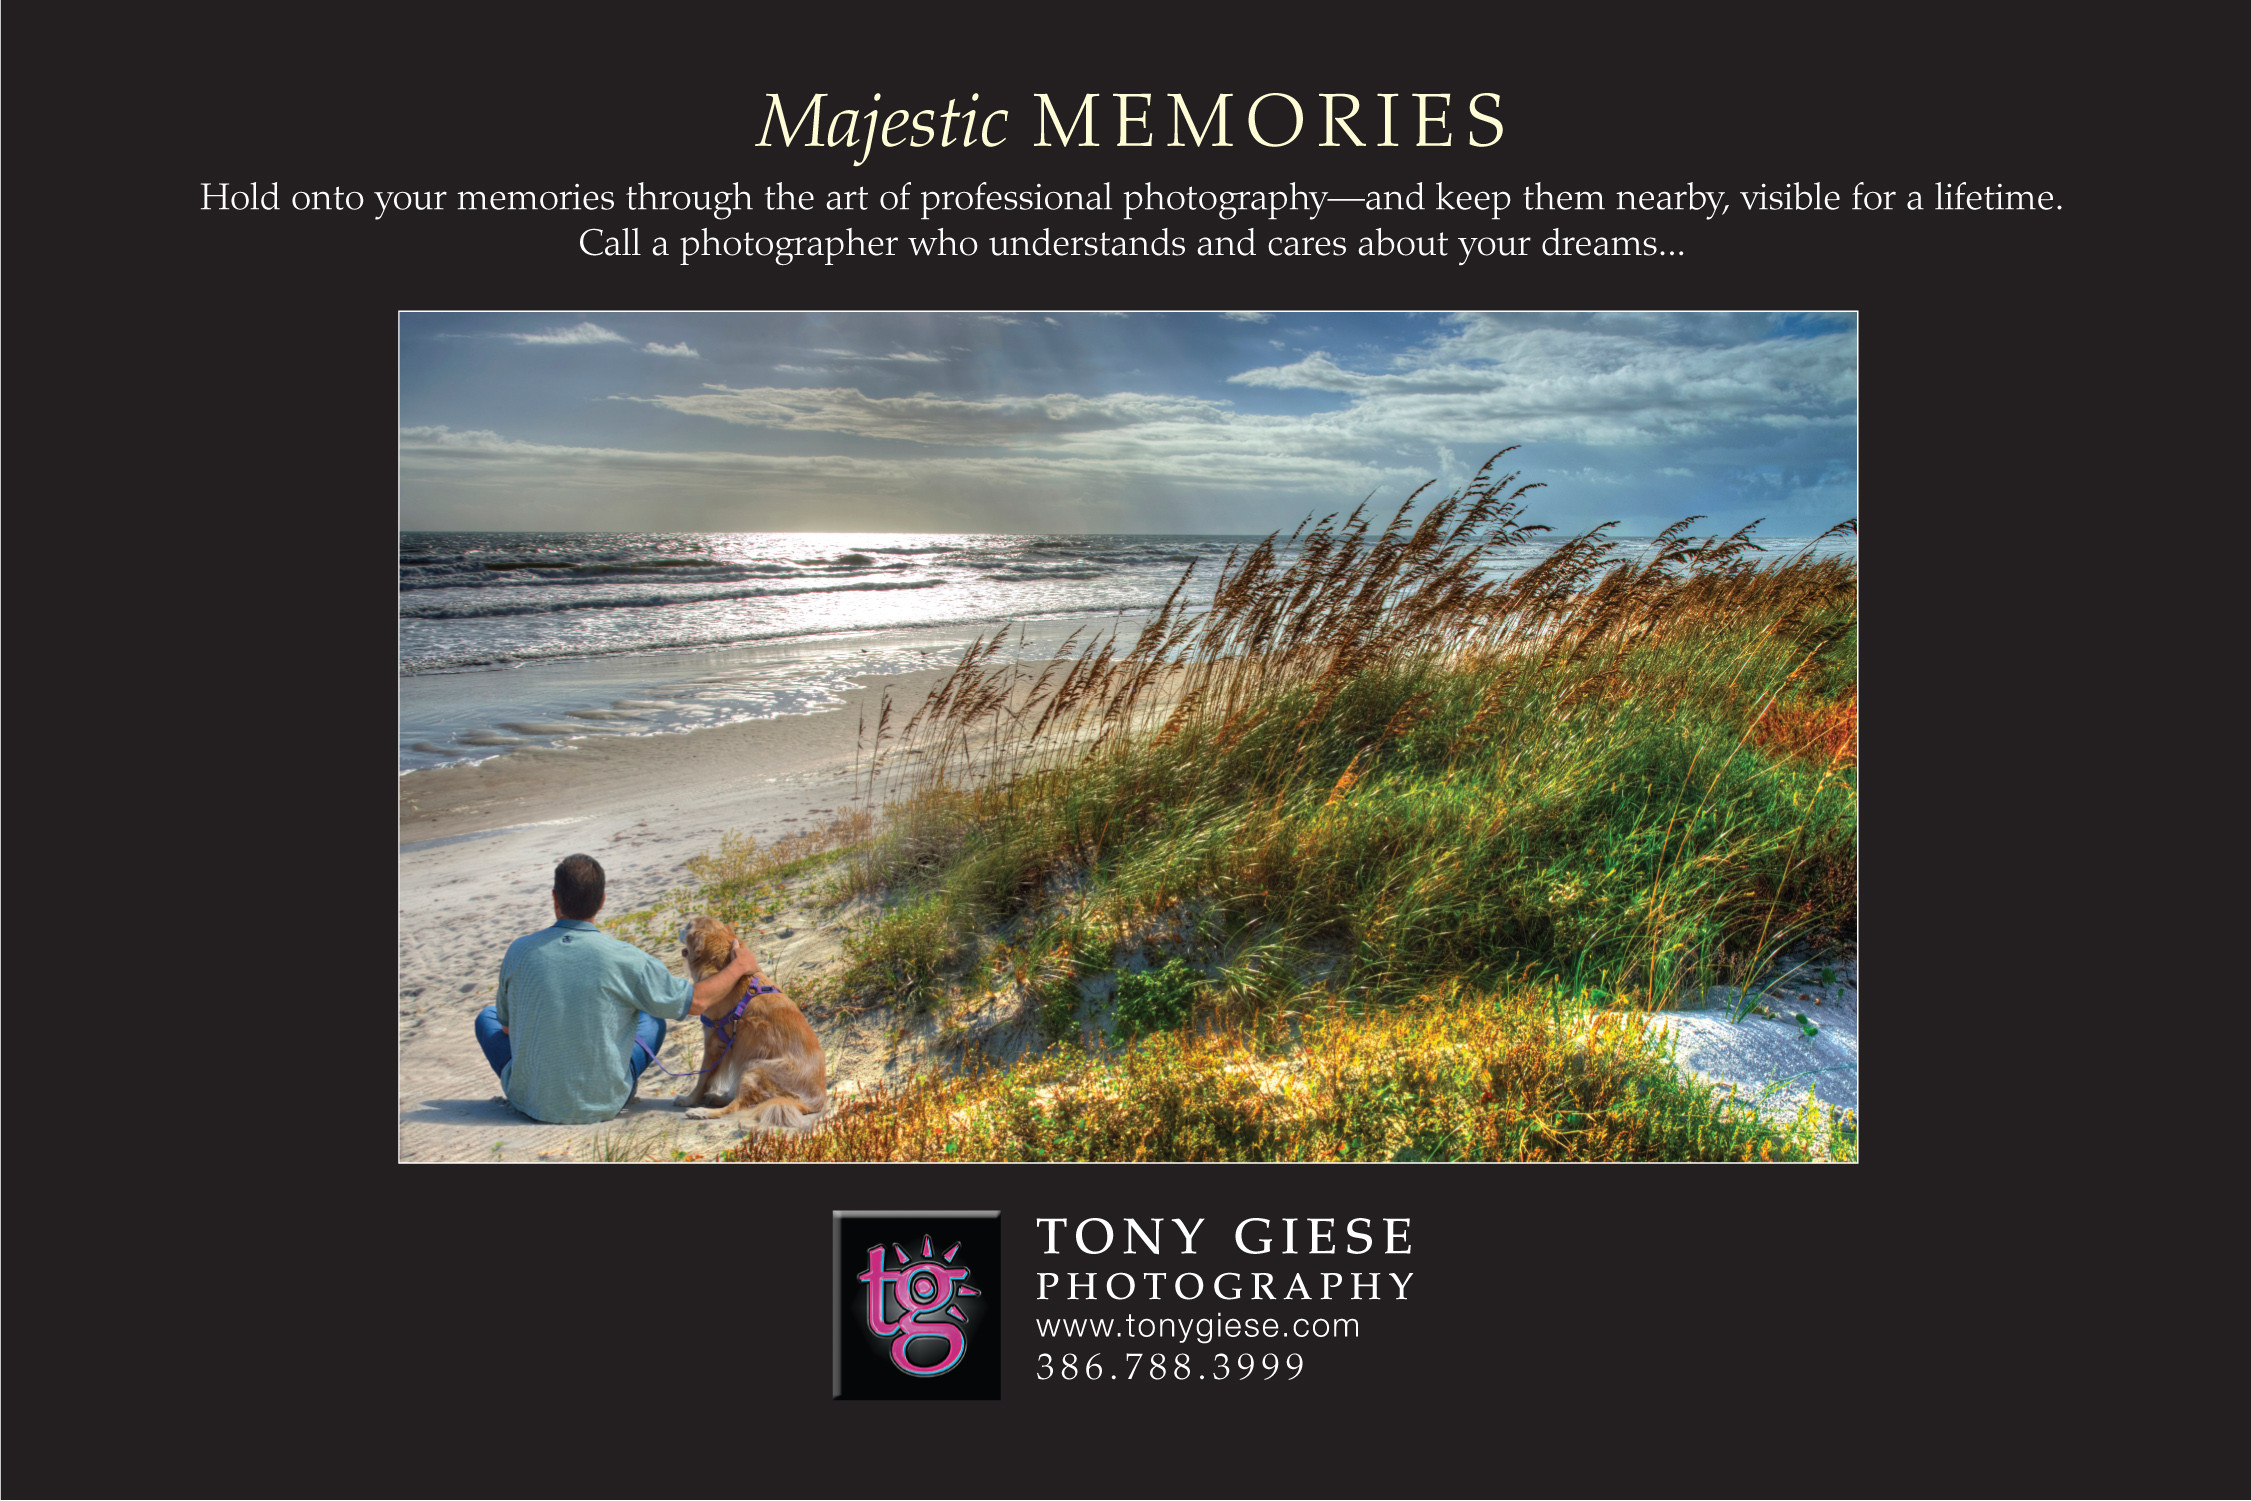 Tony and his golden retriever enjoying a Daytona Beach ocean view near a dune sea oats.